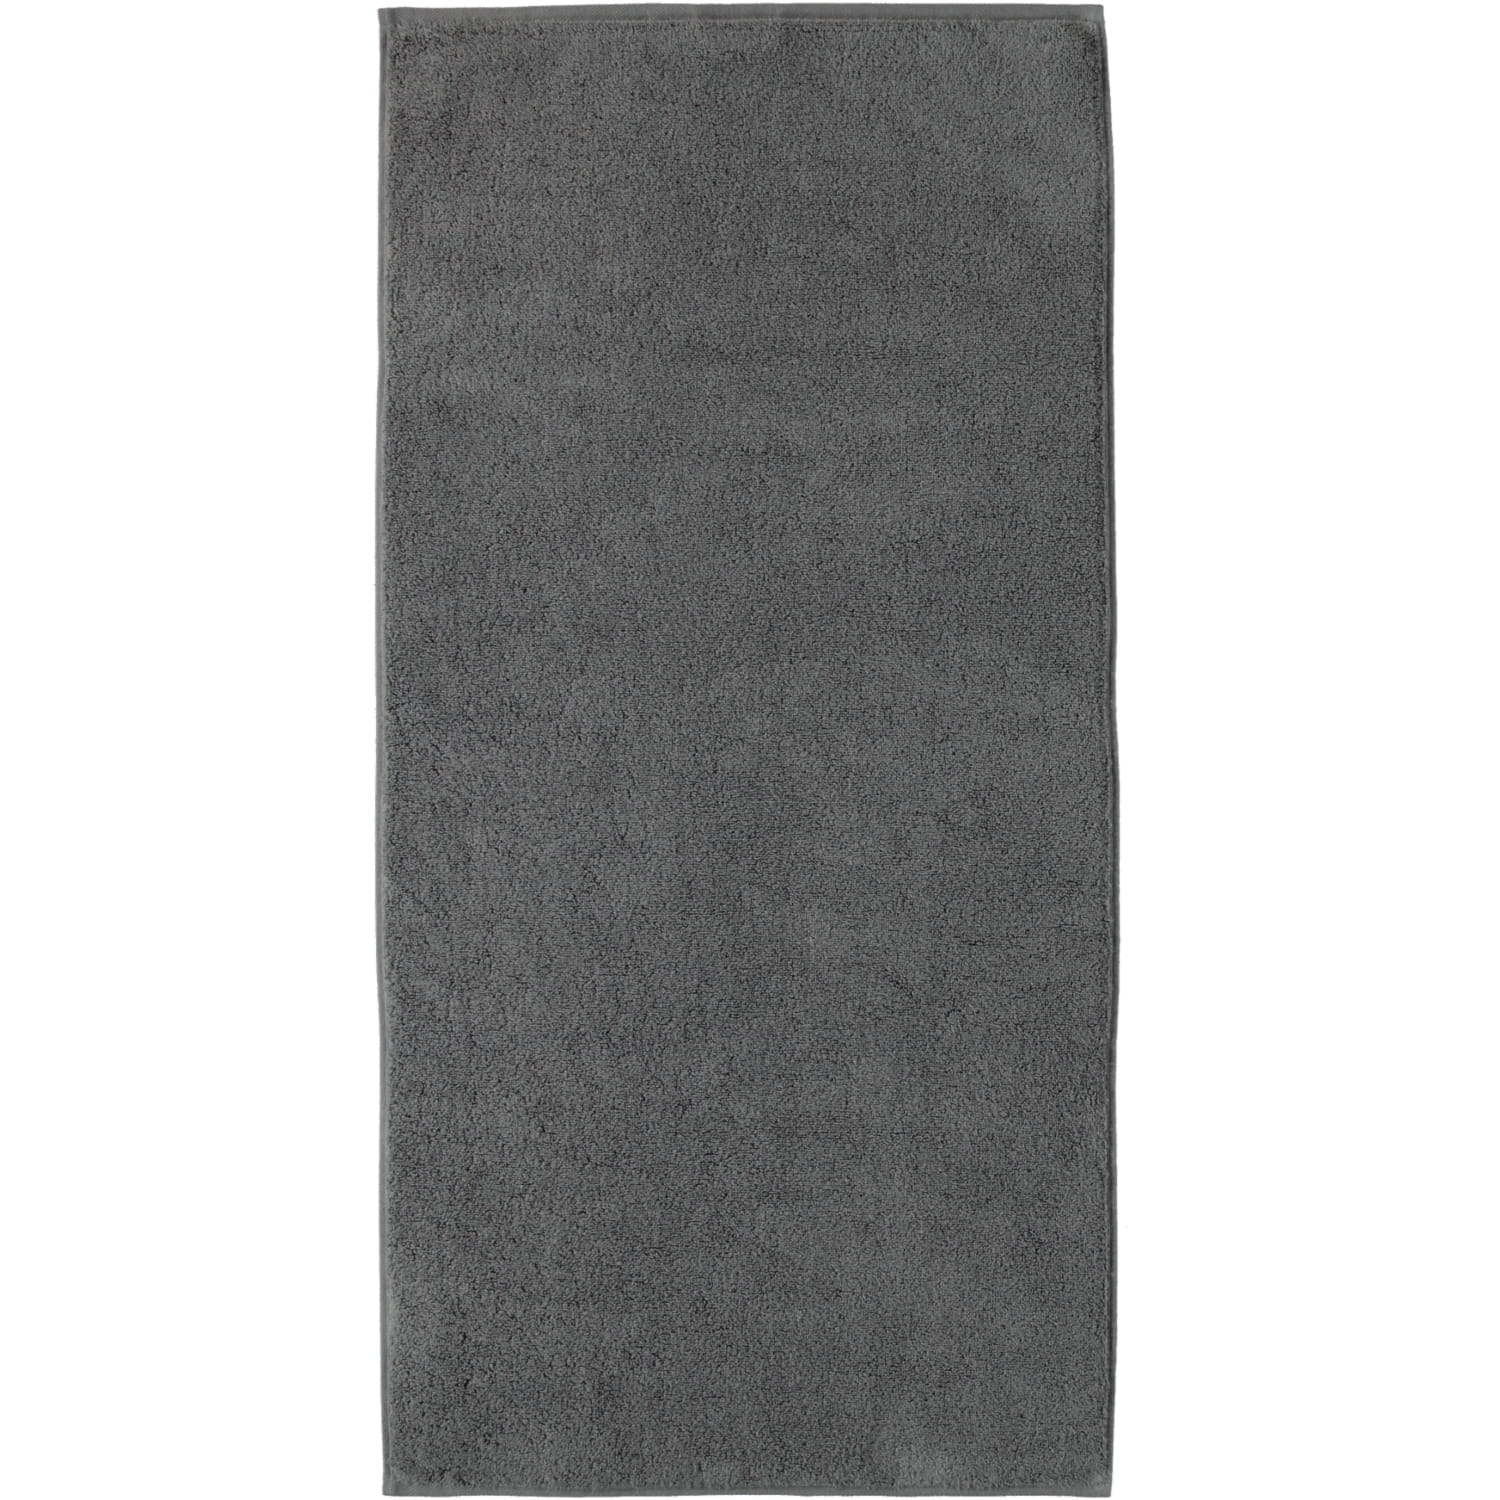 86 | - 50x100 cm Handtuch 9000 - Skin Handtuch anthrazit | Sensual Handtücher Farbe: Ross